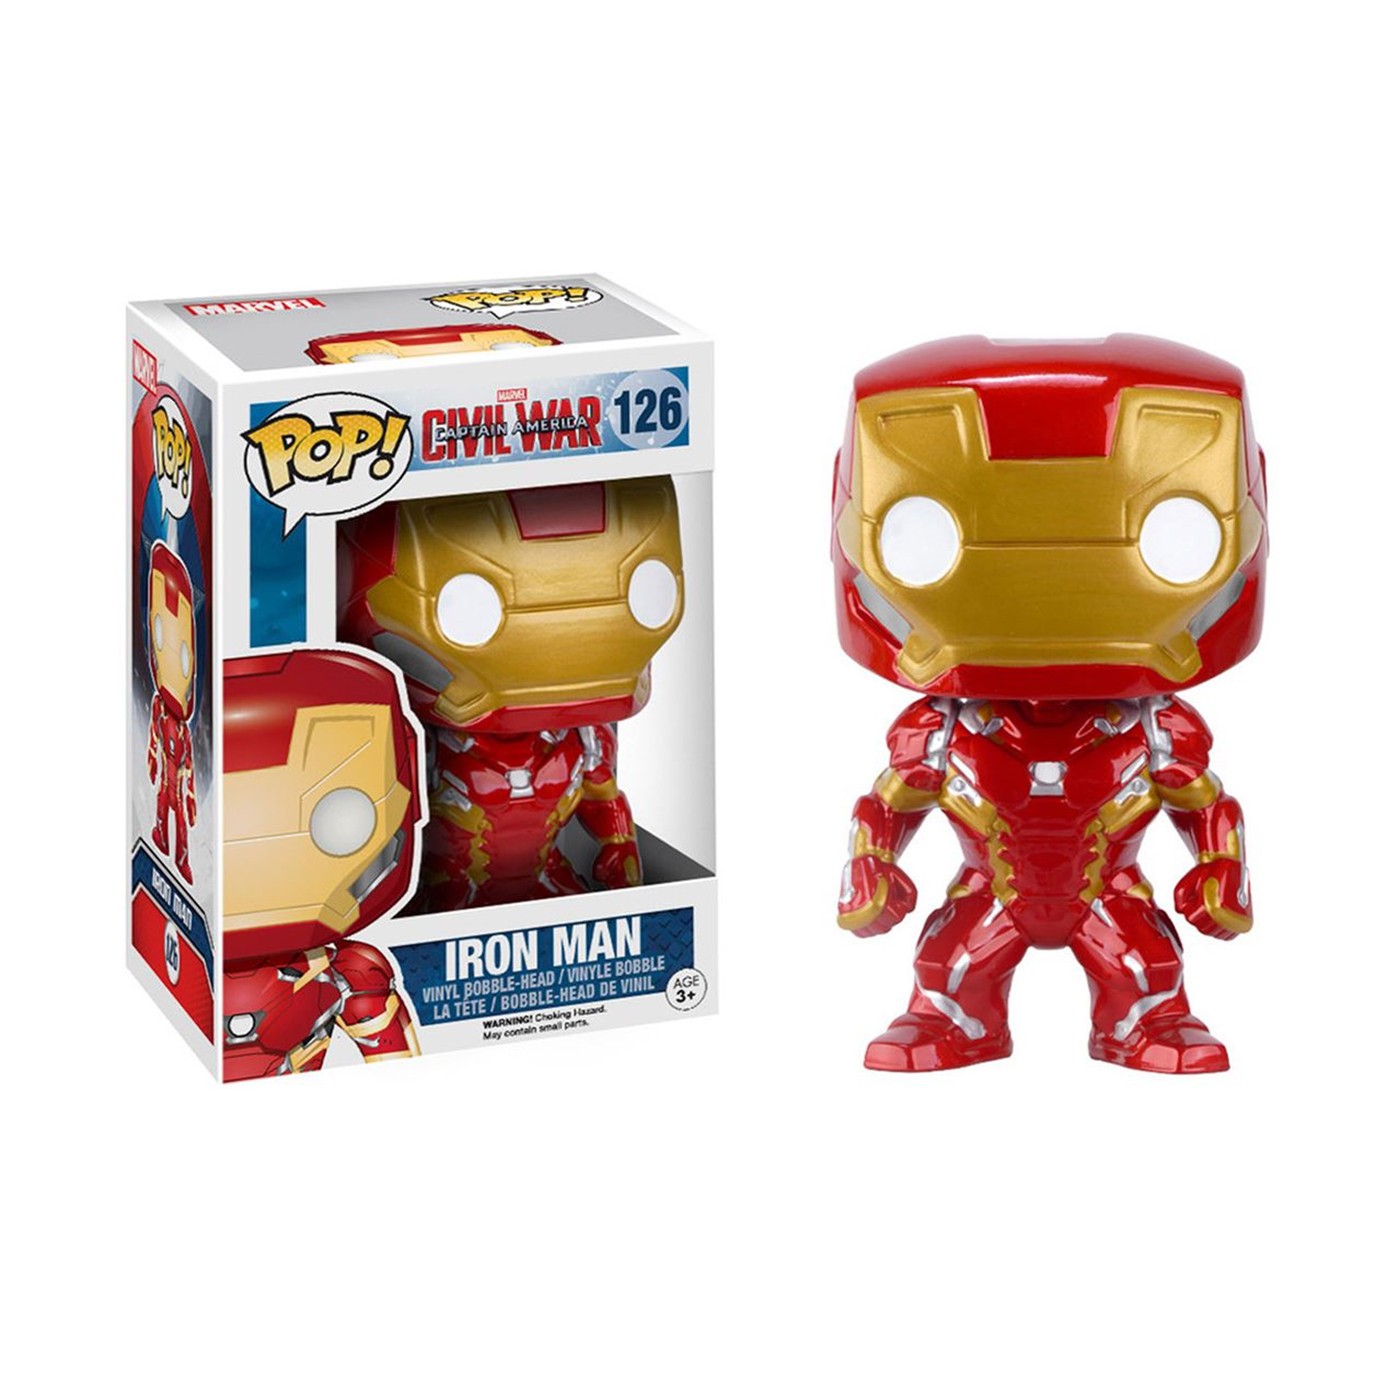 Captain America Civil War Iron Man Pop Bobblehead